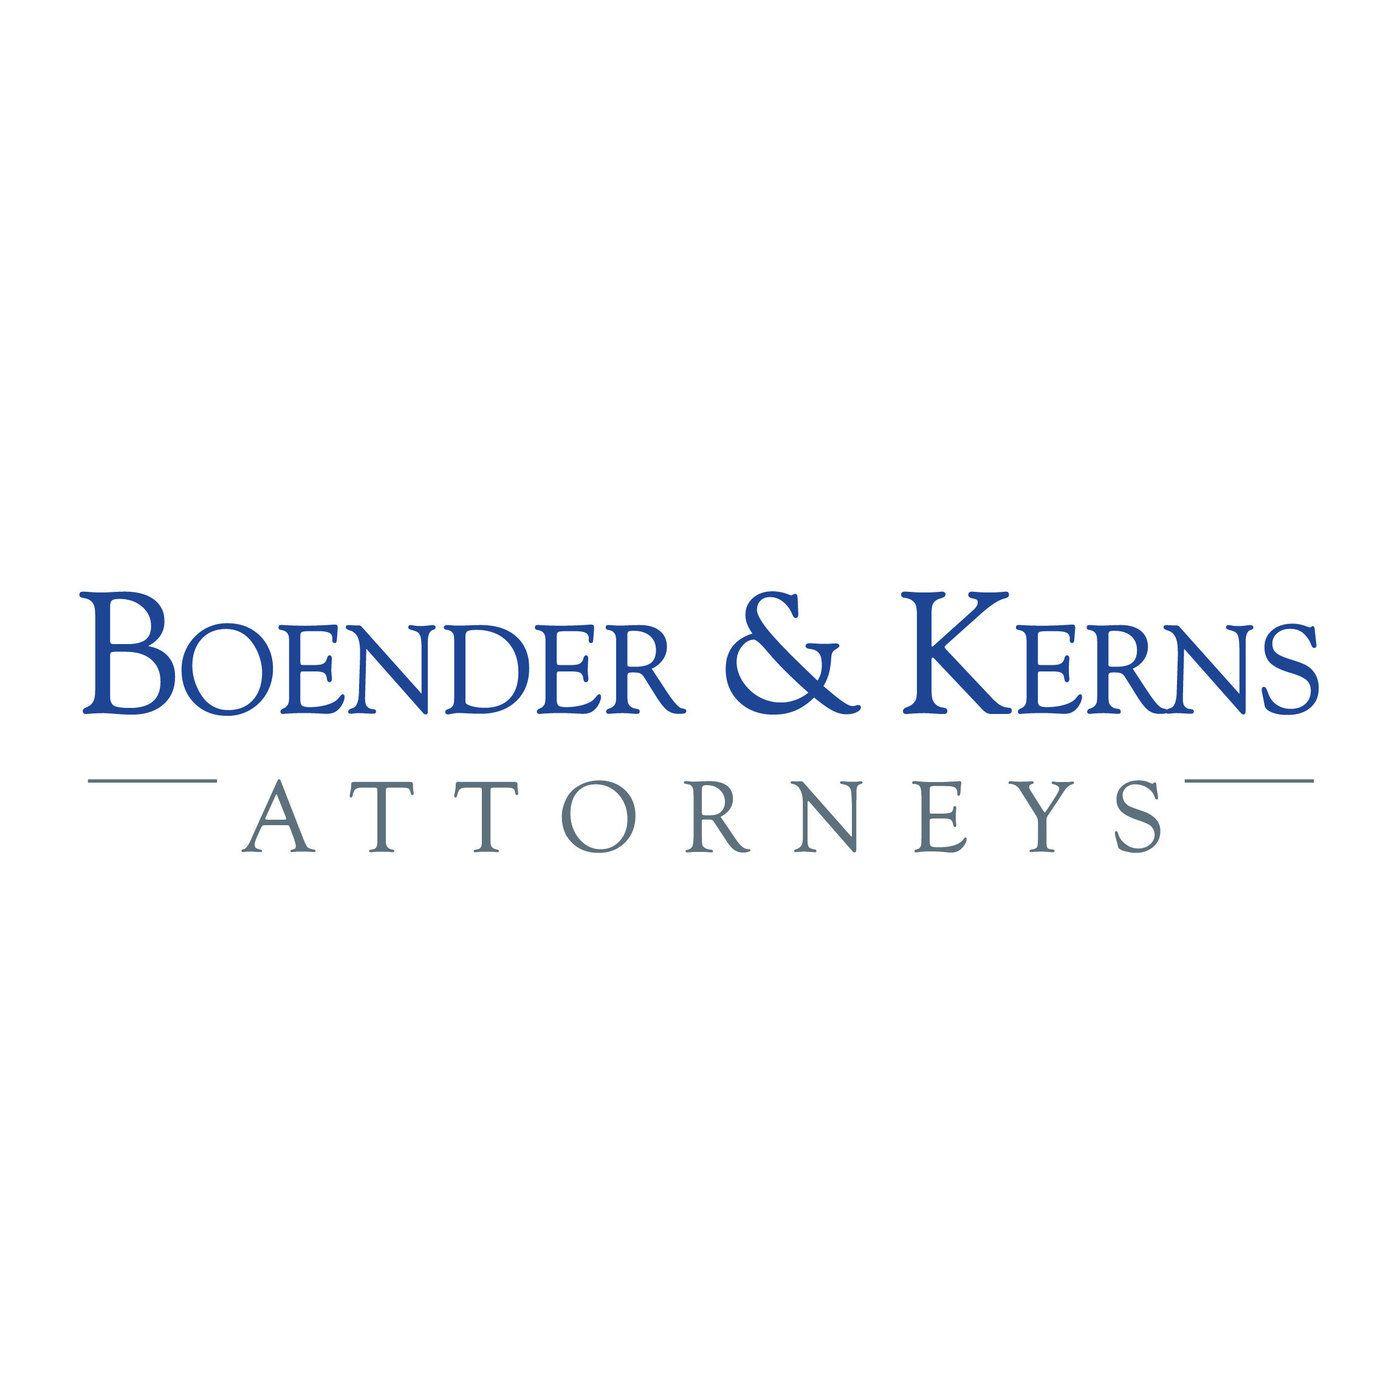 Kearns Logo - Boender & Kearns Logo Design by Susan Petruska-Garzon at Coroflot.com